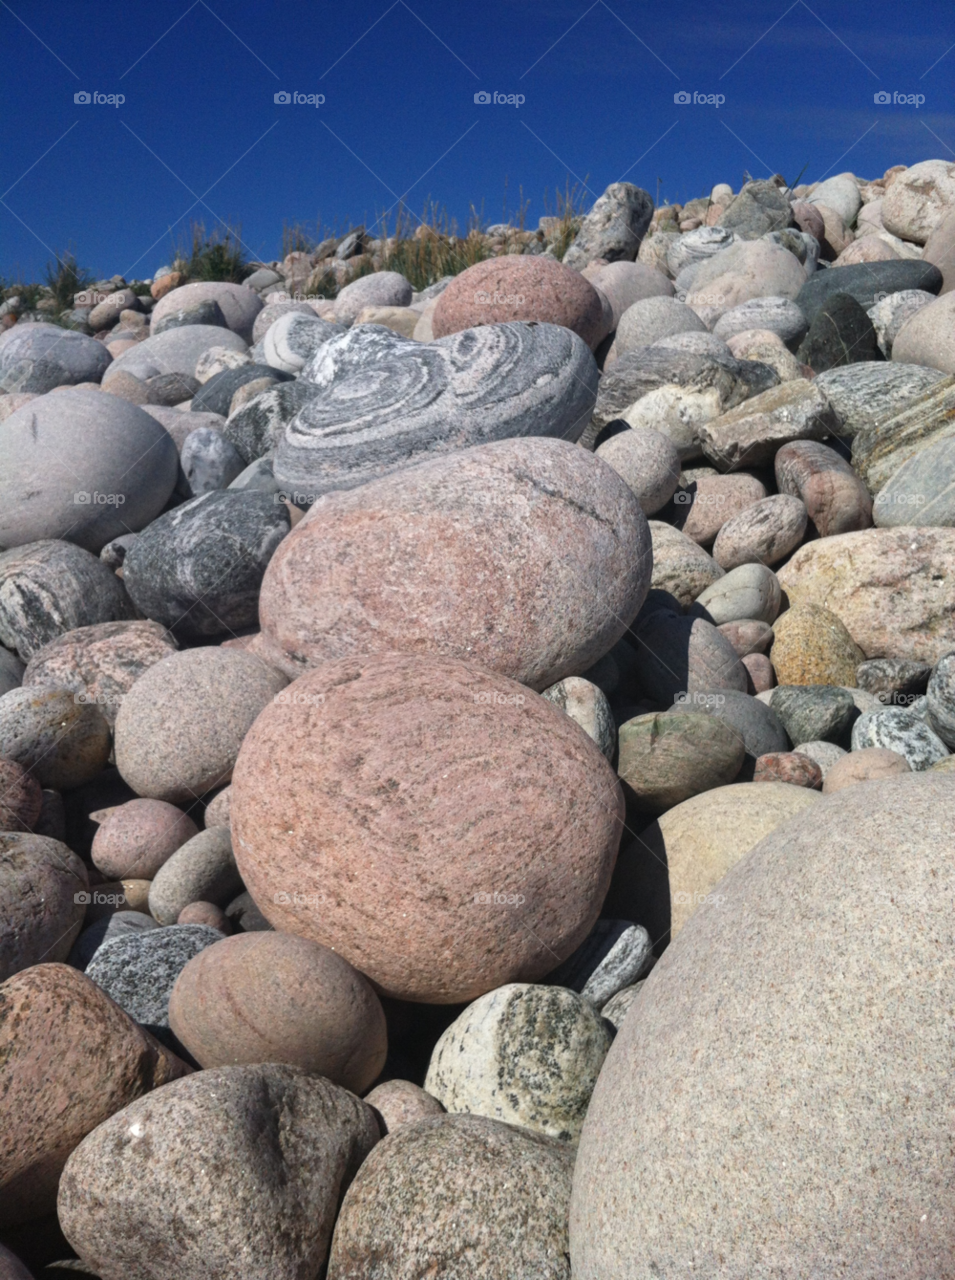 sky stones west coast in sweden by Armann